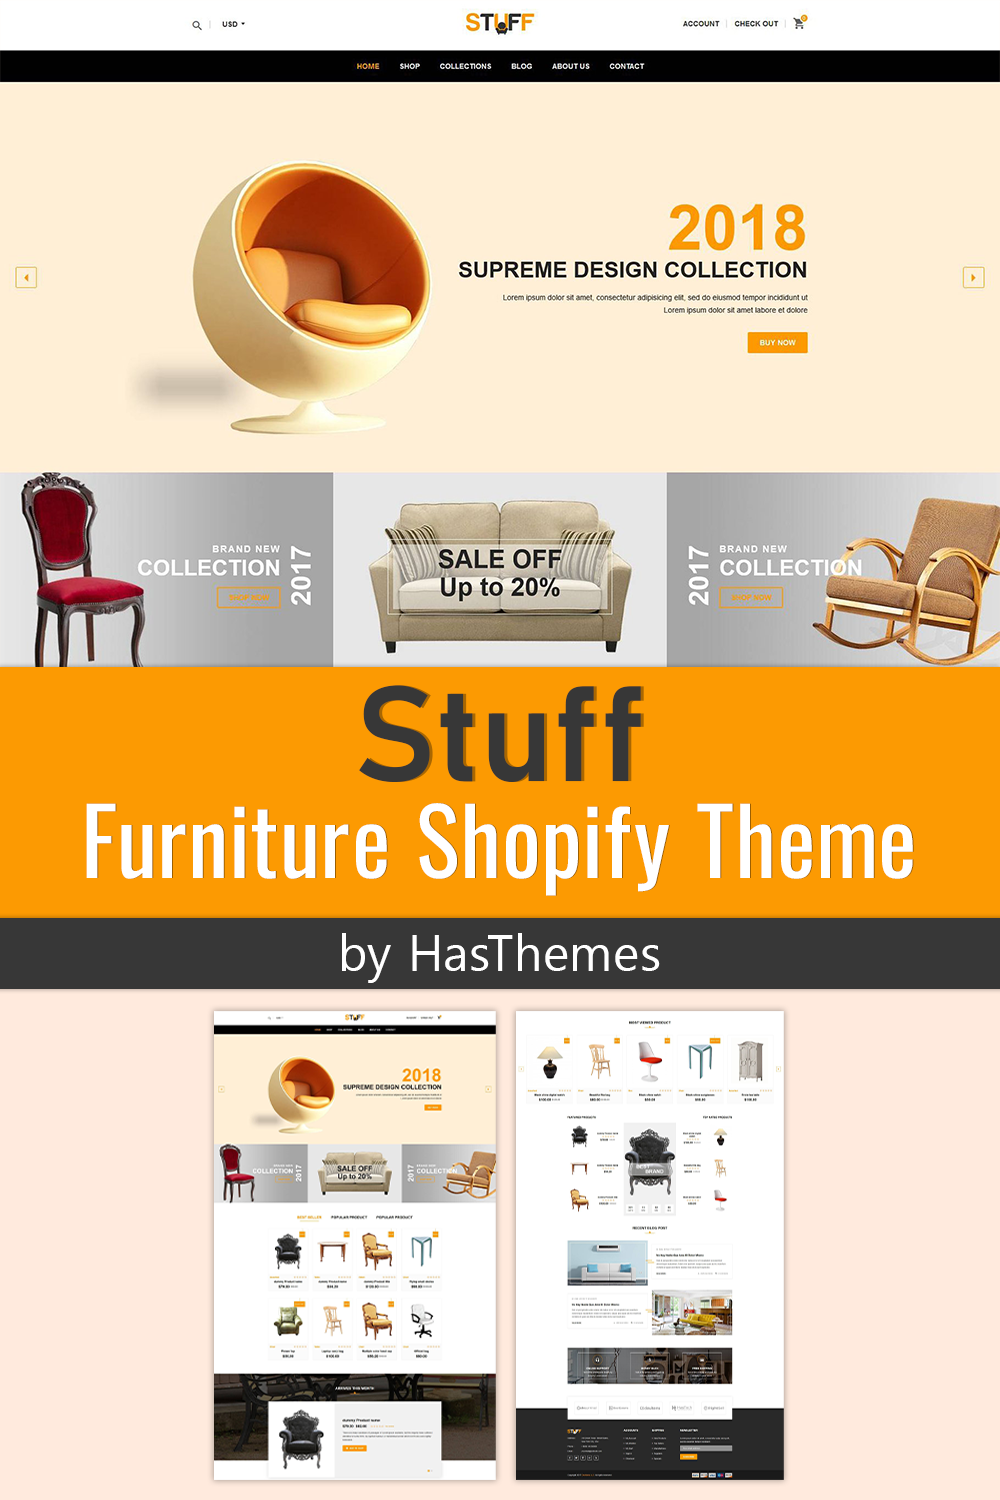 Furniture shopify theme stuff of pinterest.